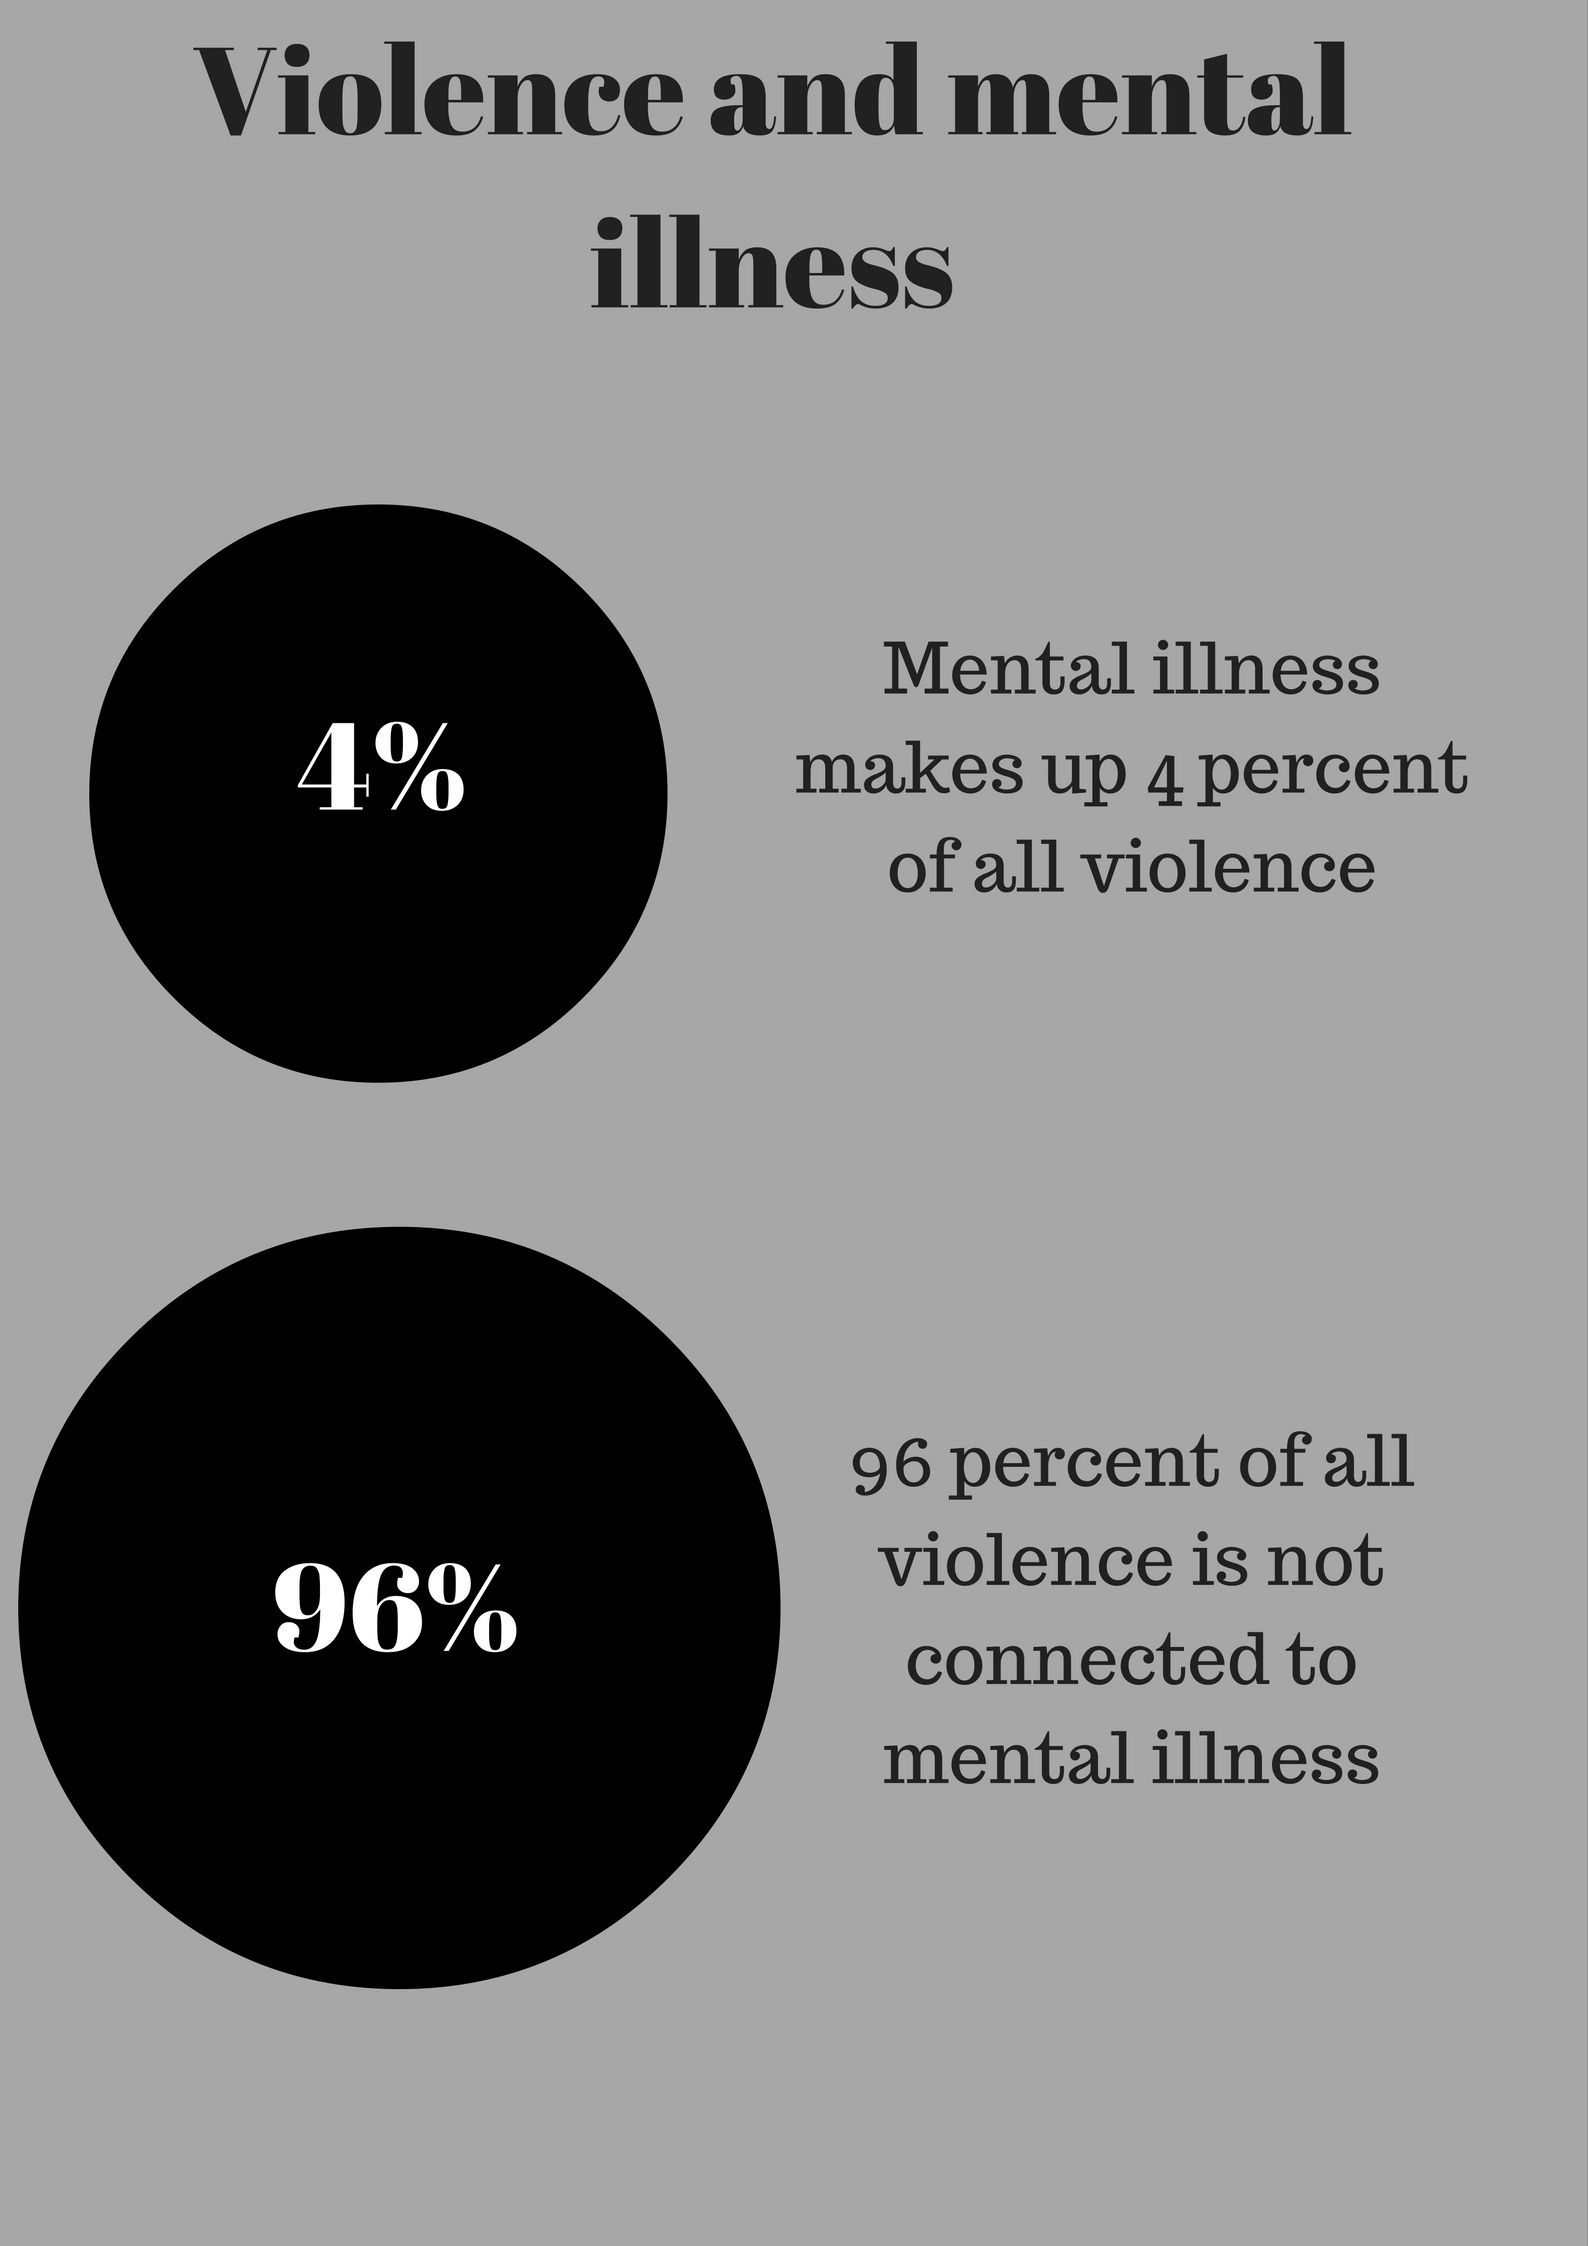 Gun violence and mental illness